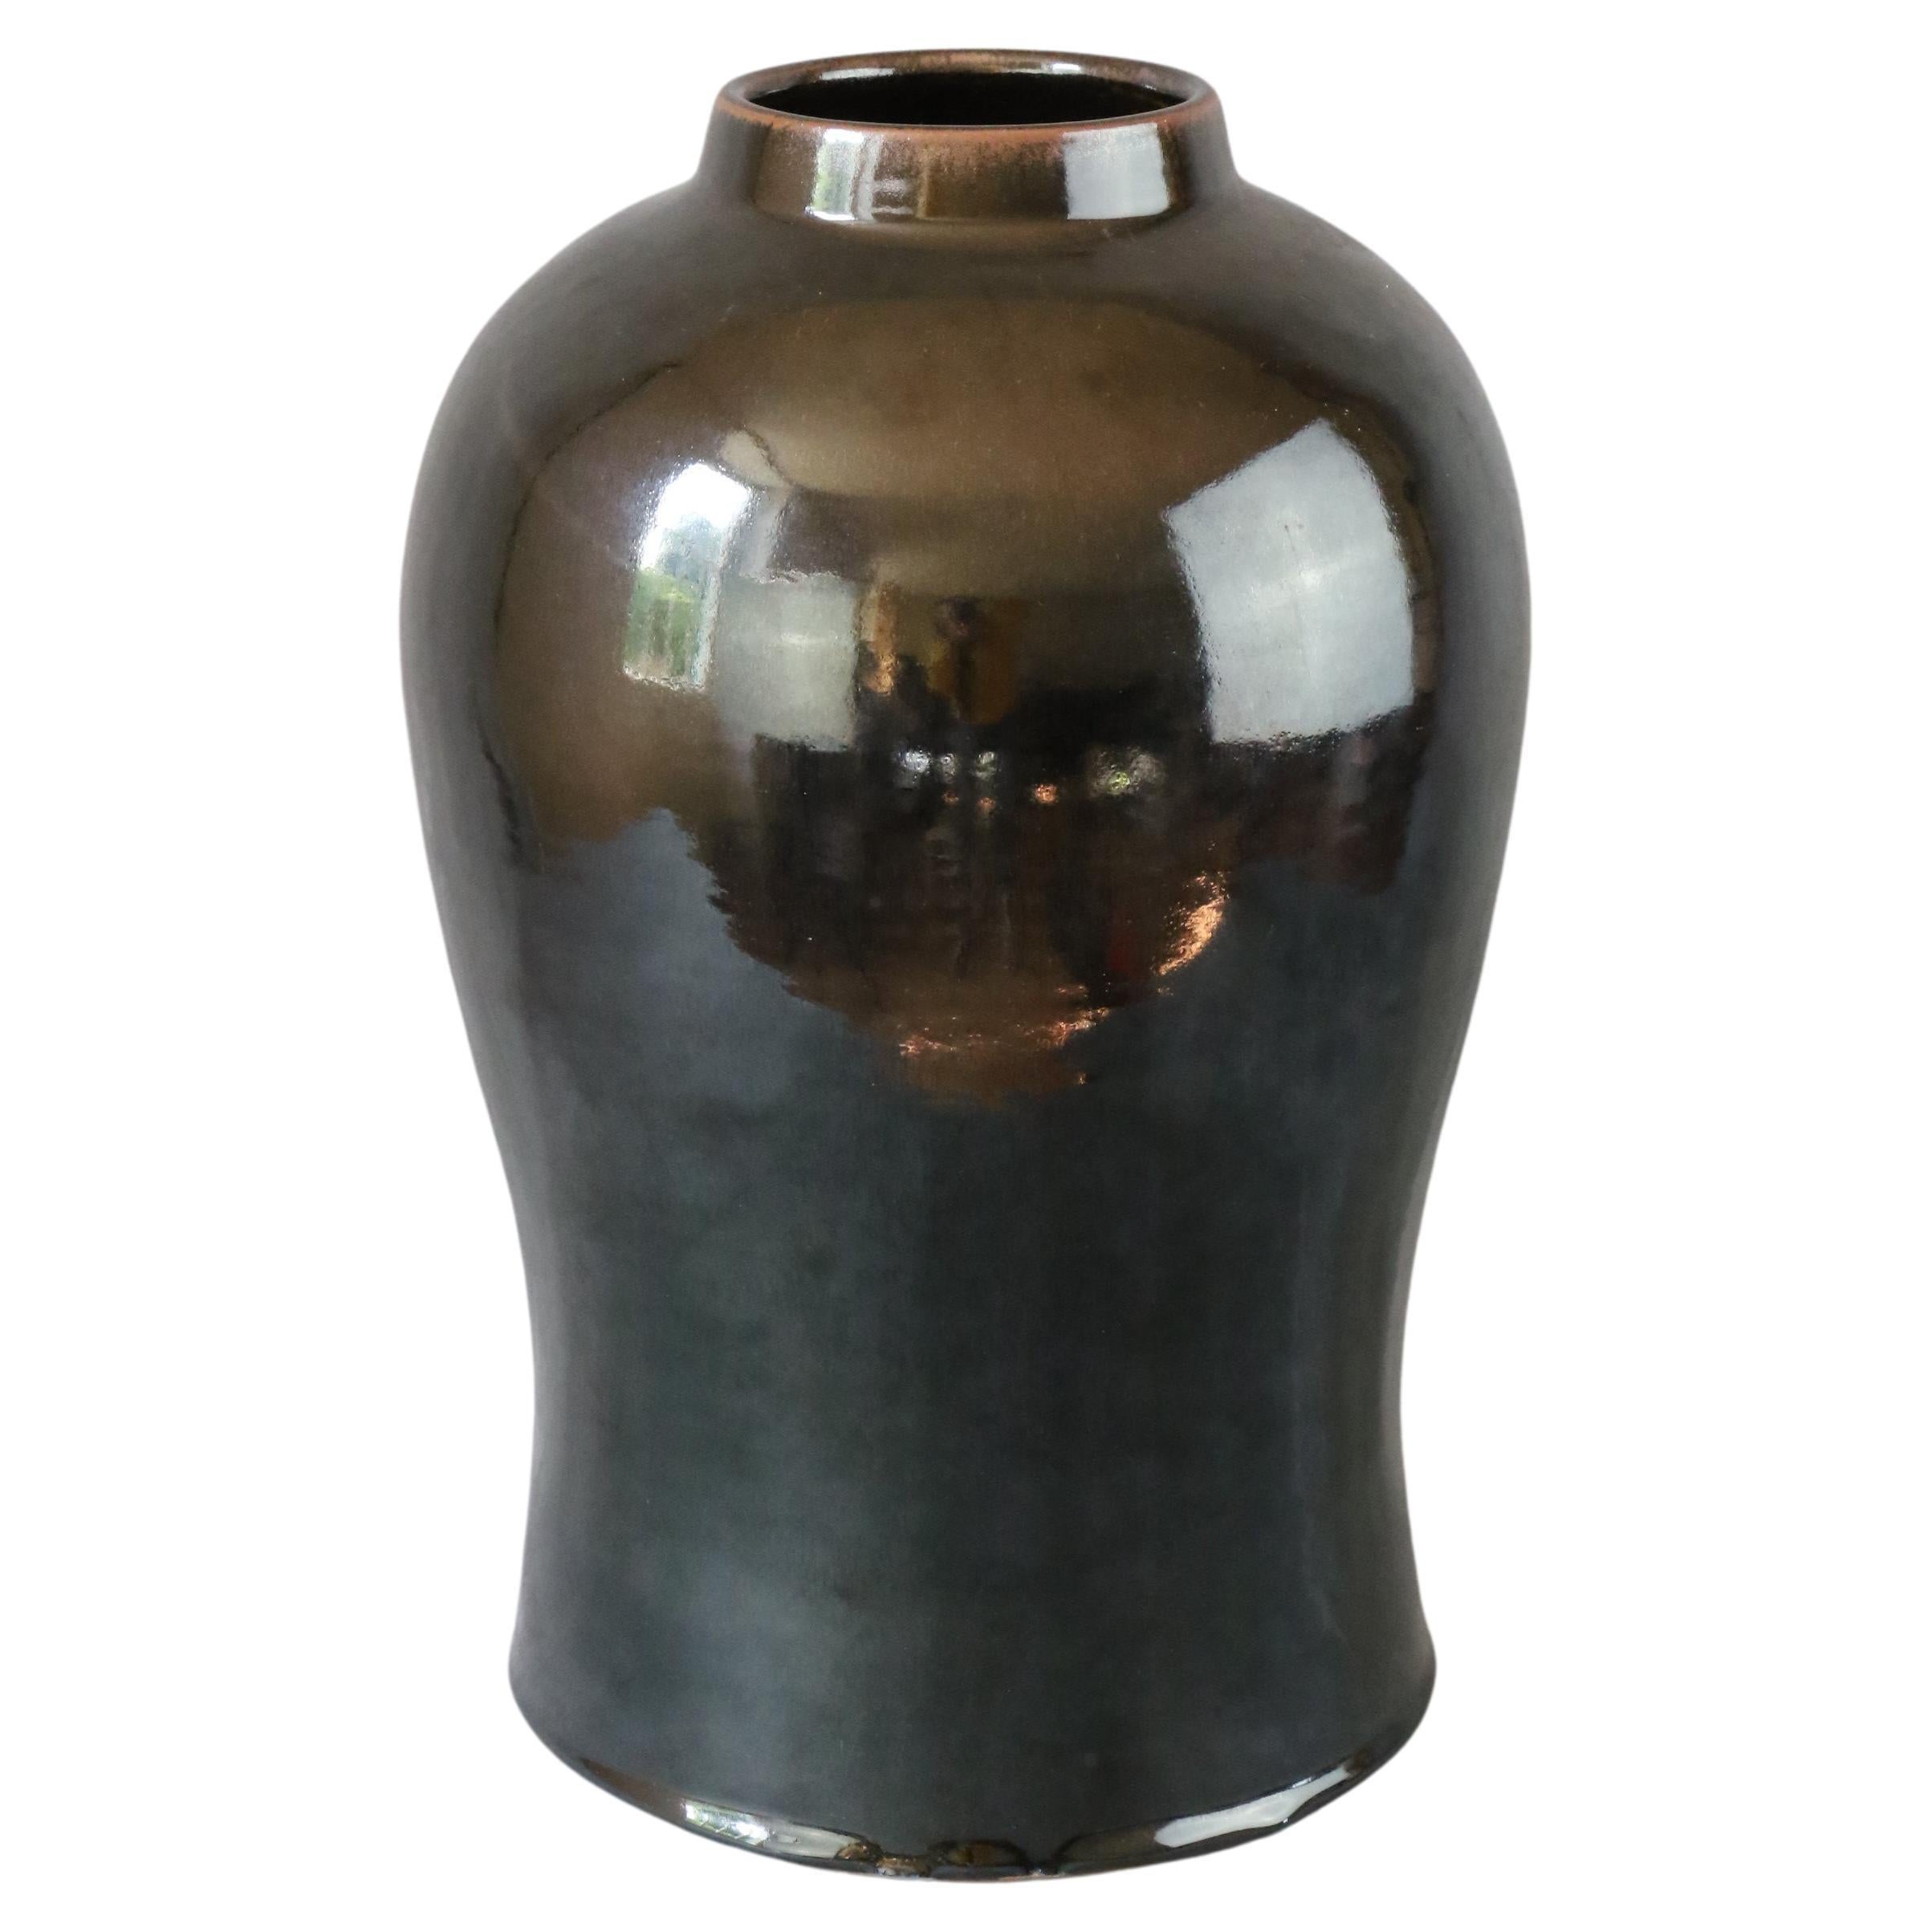 Massive black ceramic vase by the french ceramist Marc Uzan, Midcentury Modern